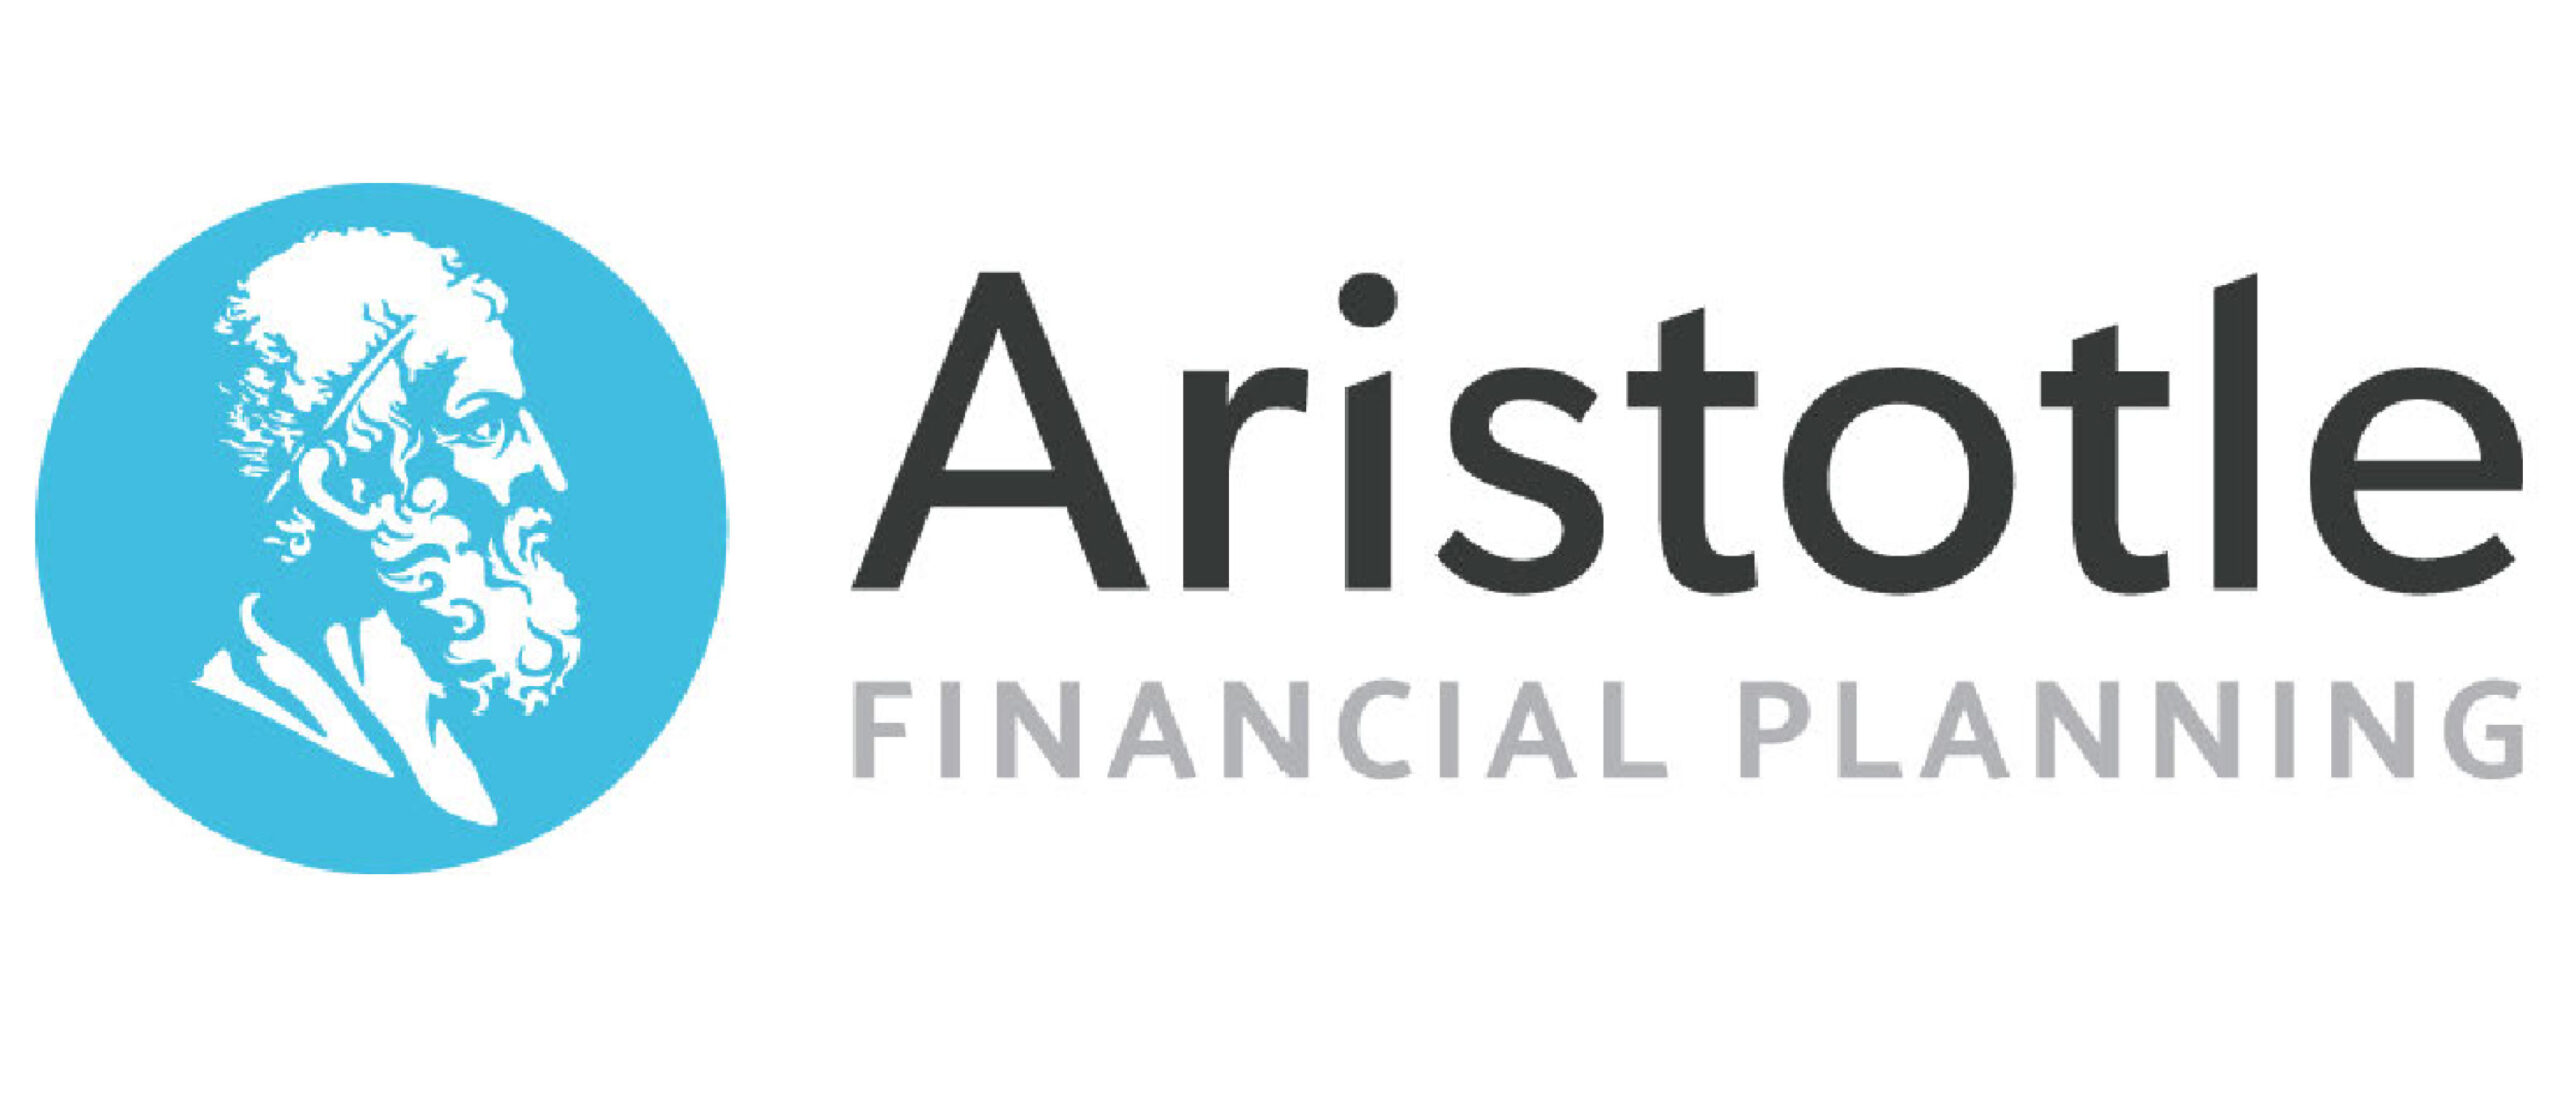 Aristotle Financial Planning